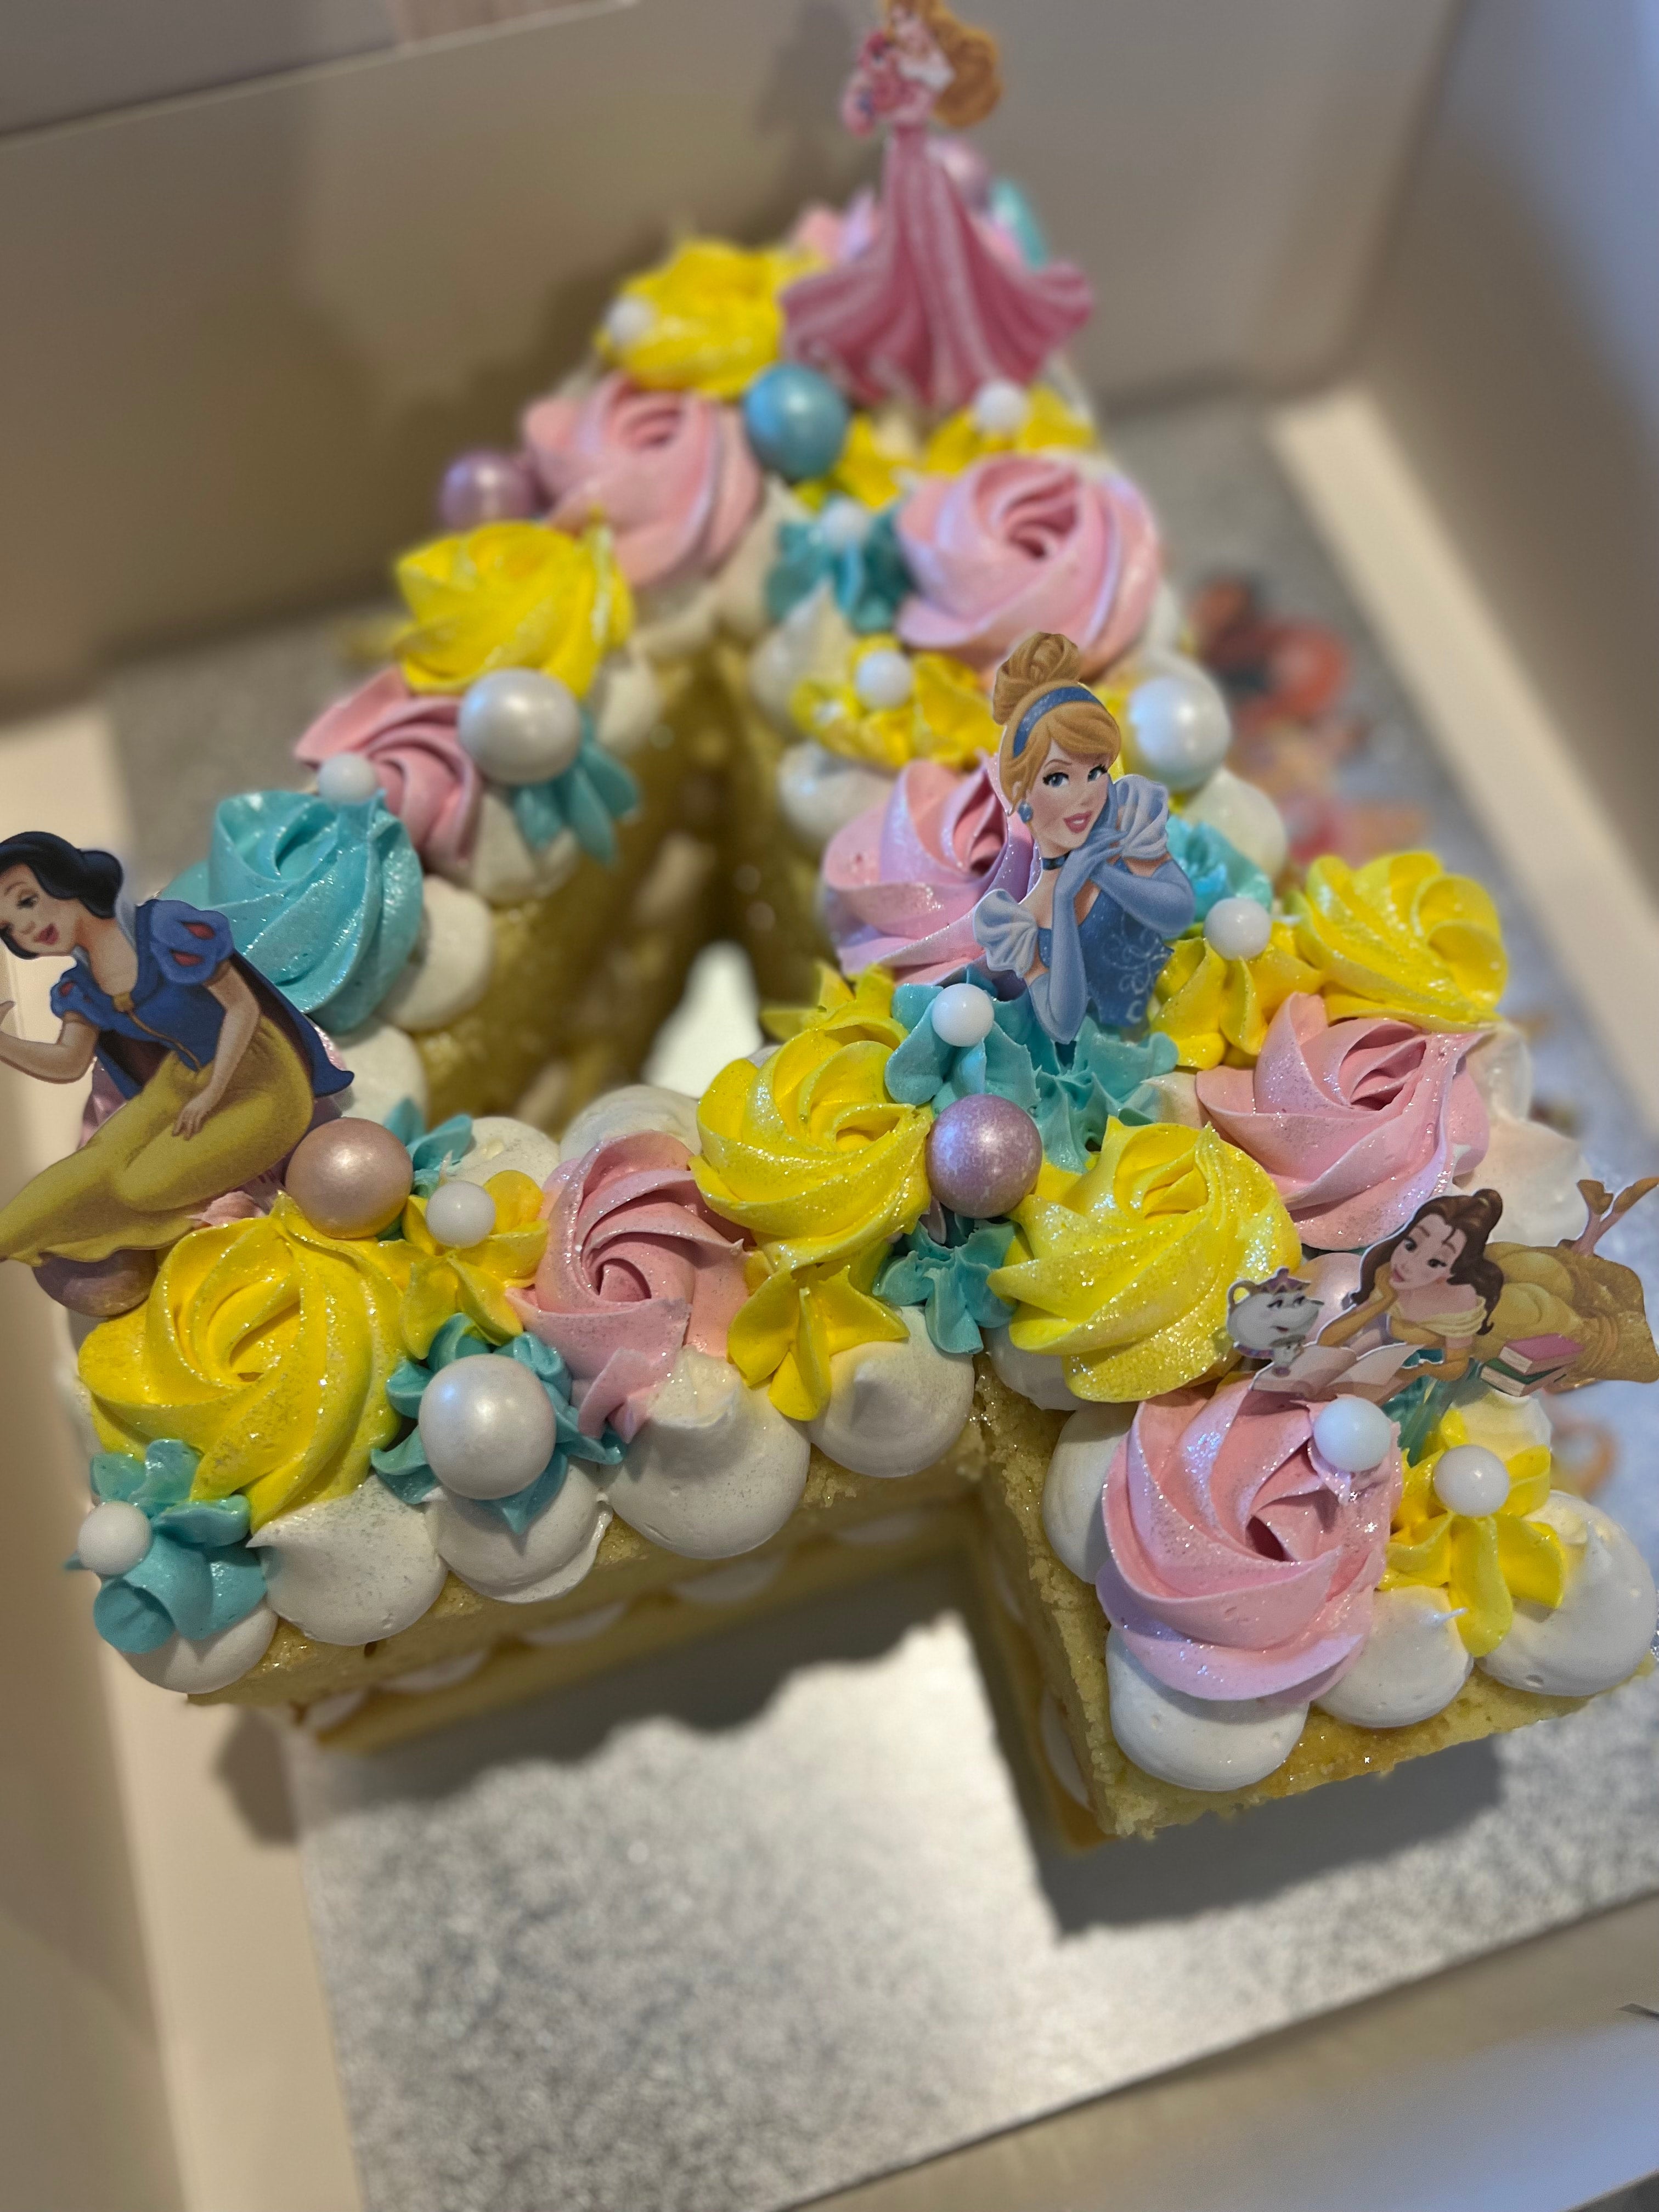 Disney Princess cupcakes! 👸🏼👸🏽👸🏻 #cakesoff5th | Instagram